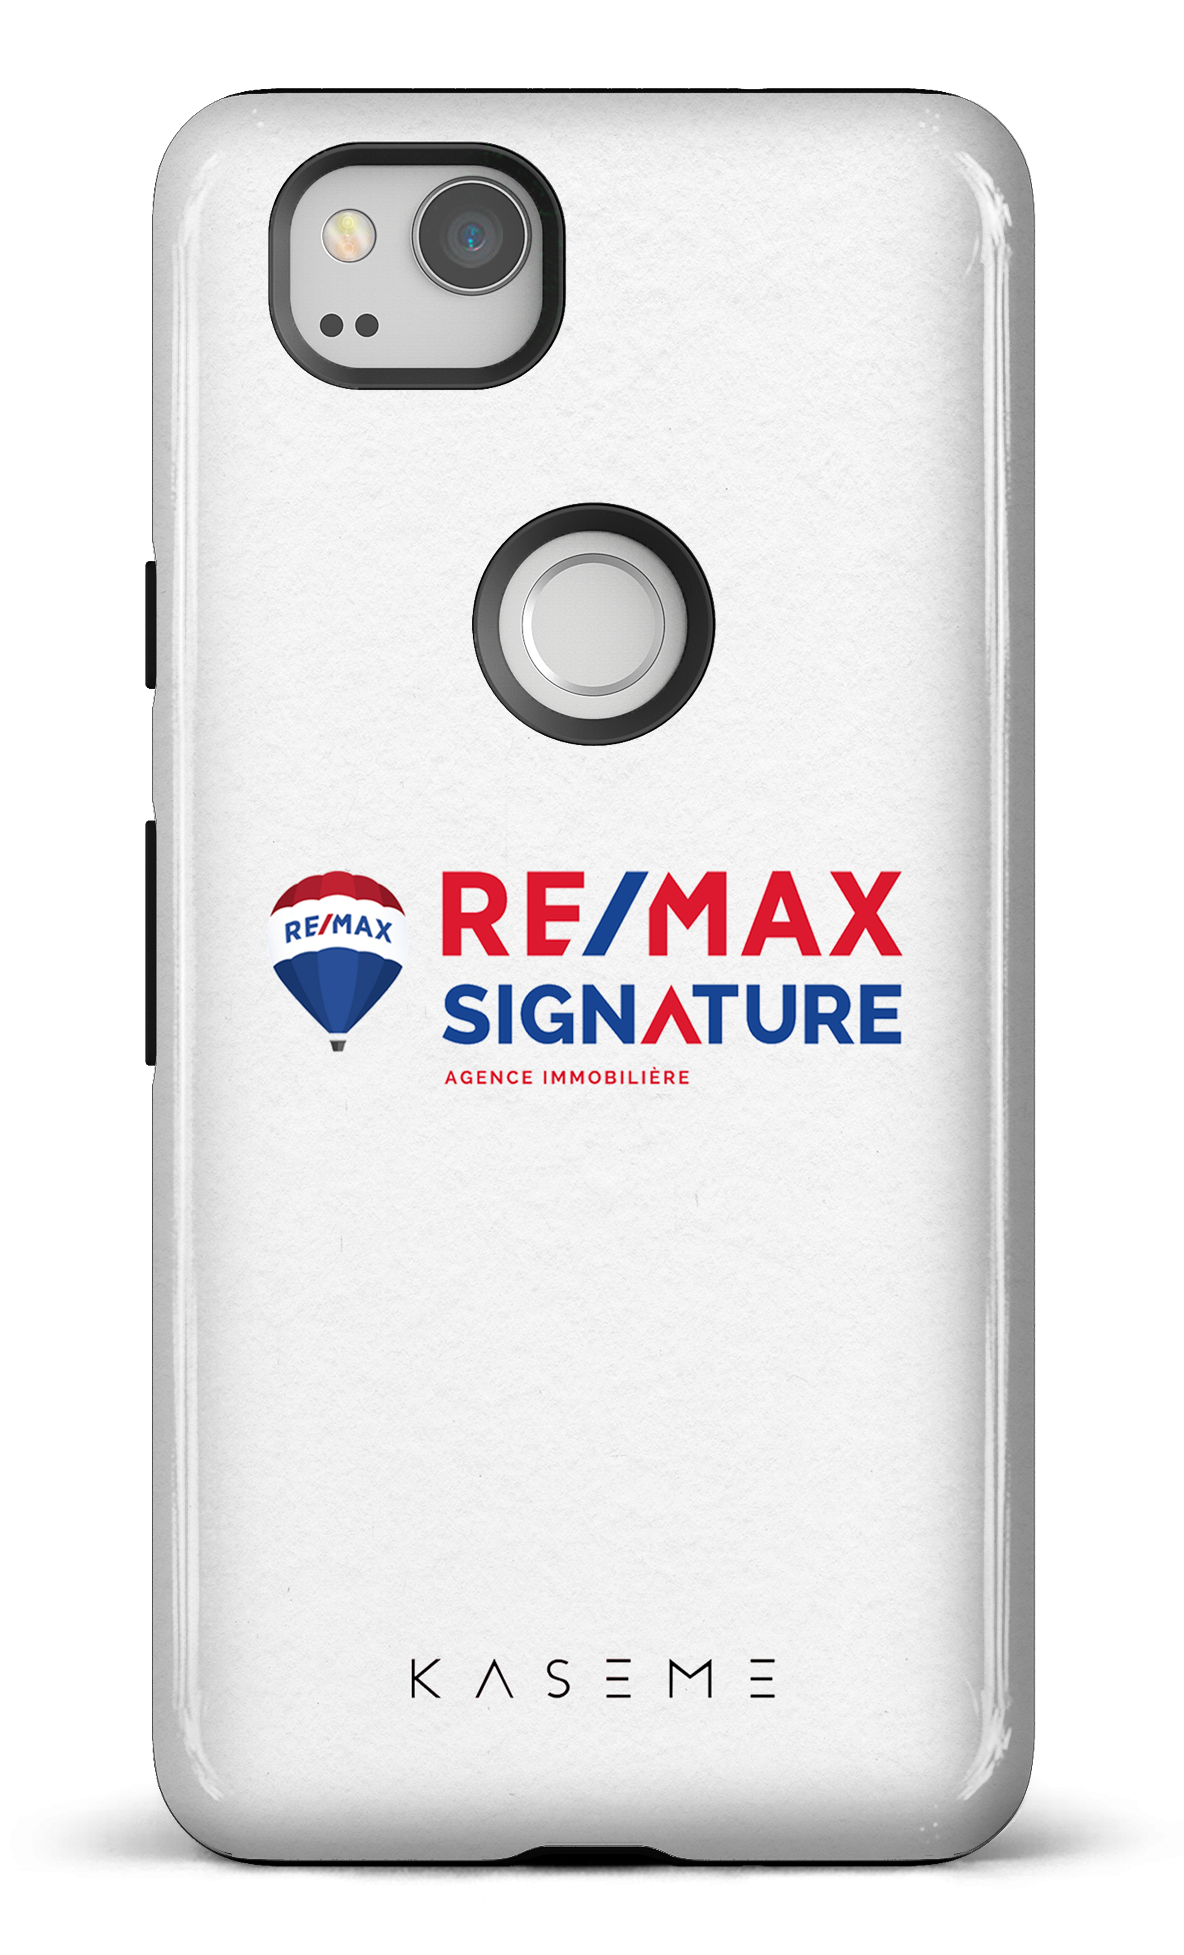 Remax Signature Blanc - Google Pixel 2